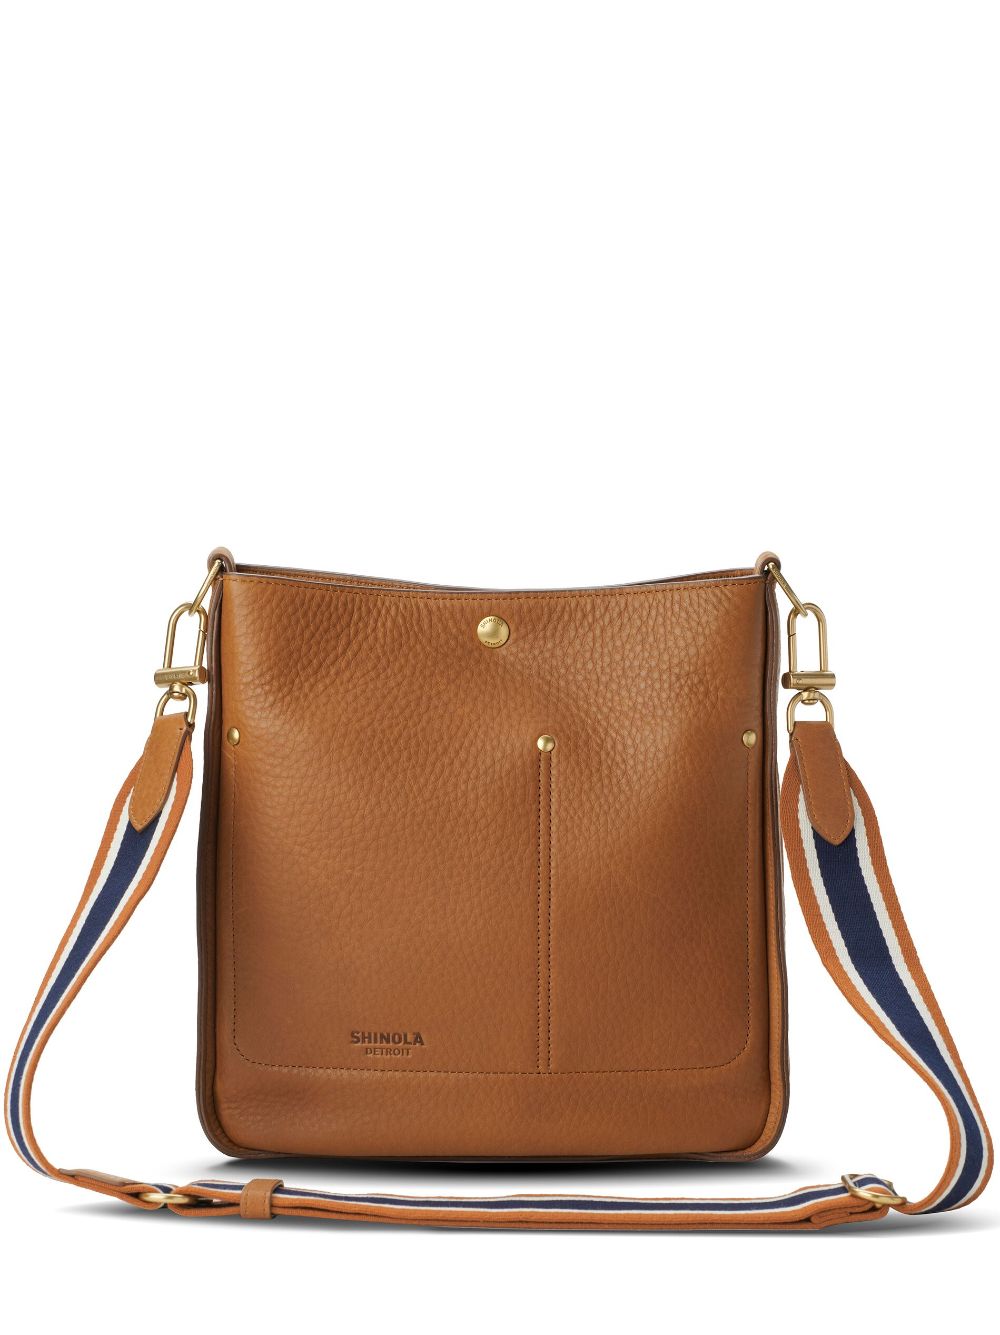 Shinola The Pocket leather crossbody bag - Brown von Shinola